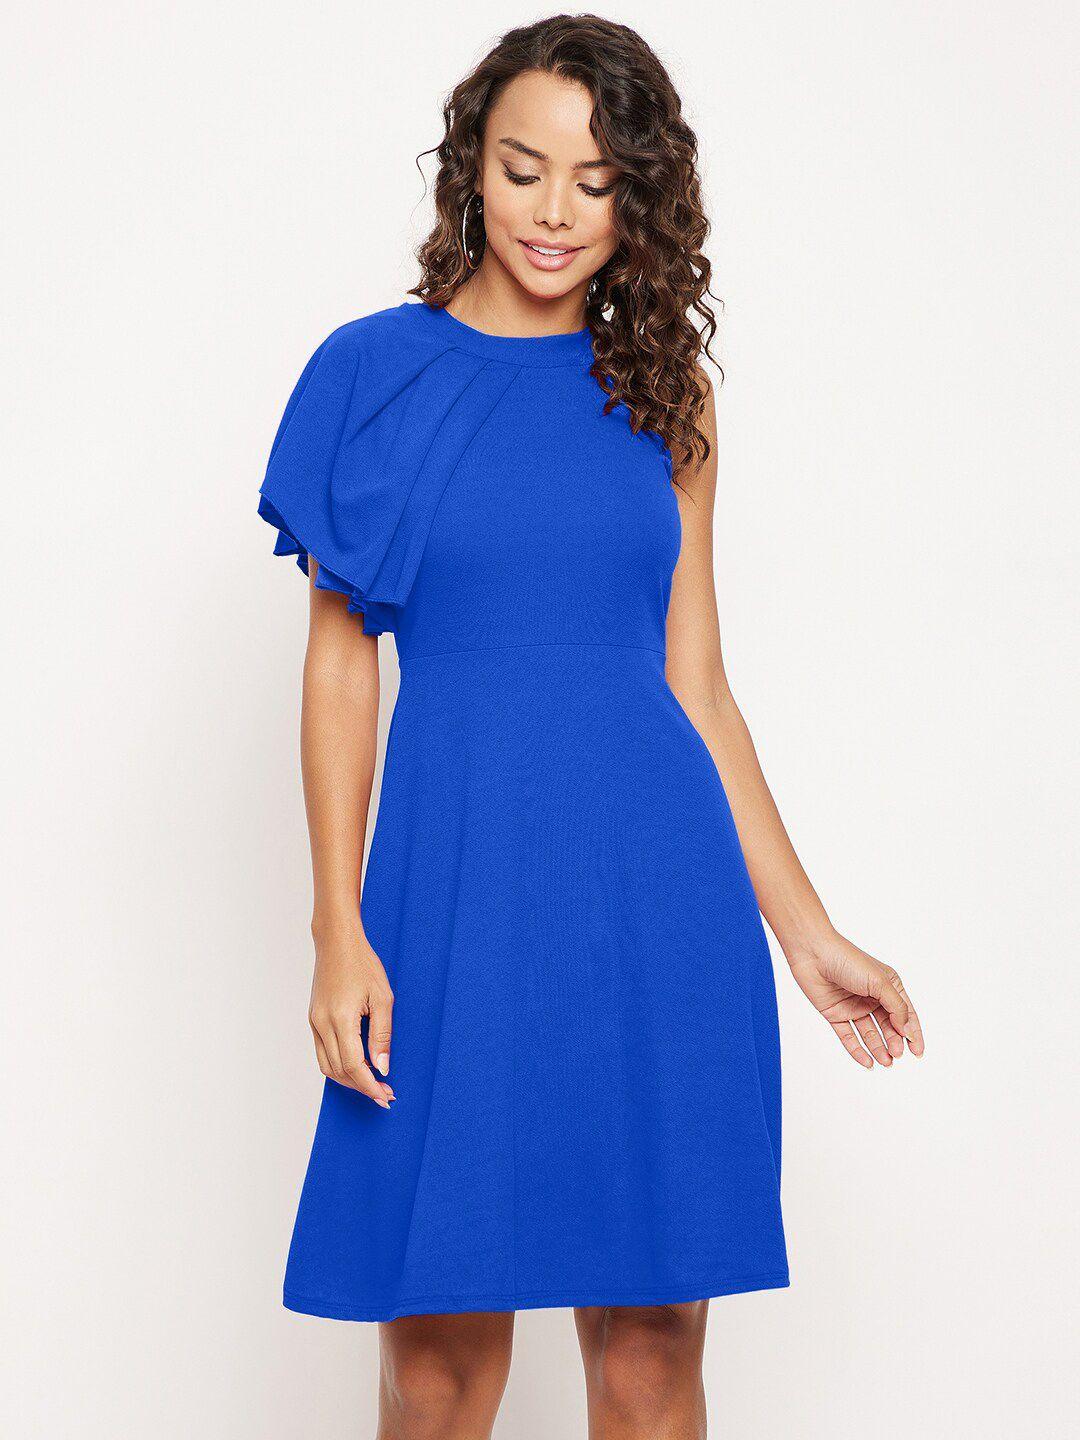 uptownie-lite-blue-dress